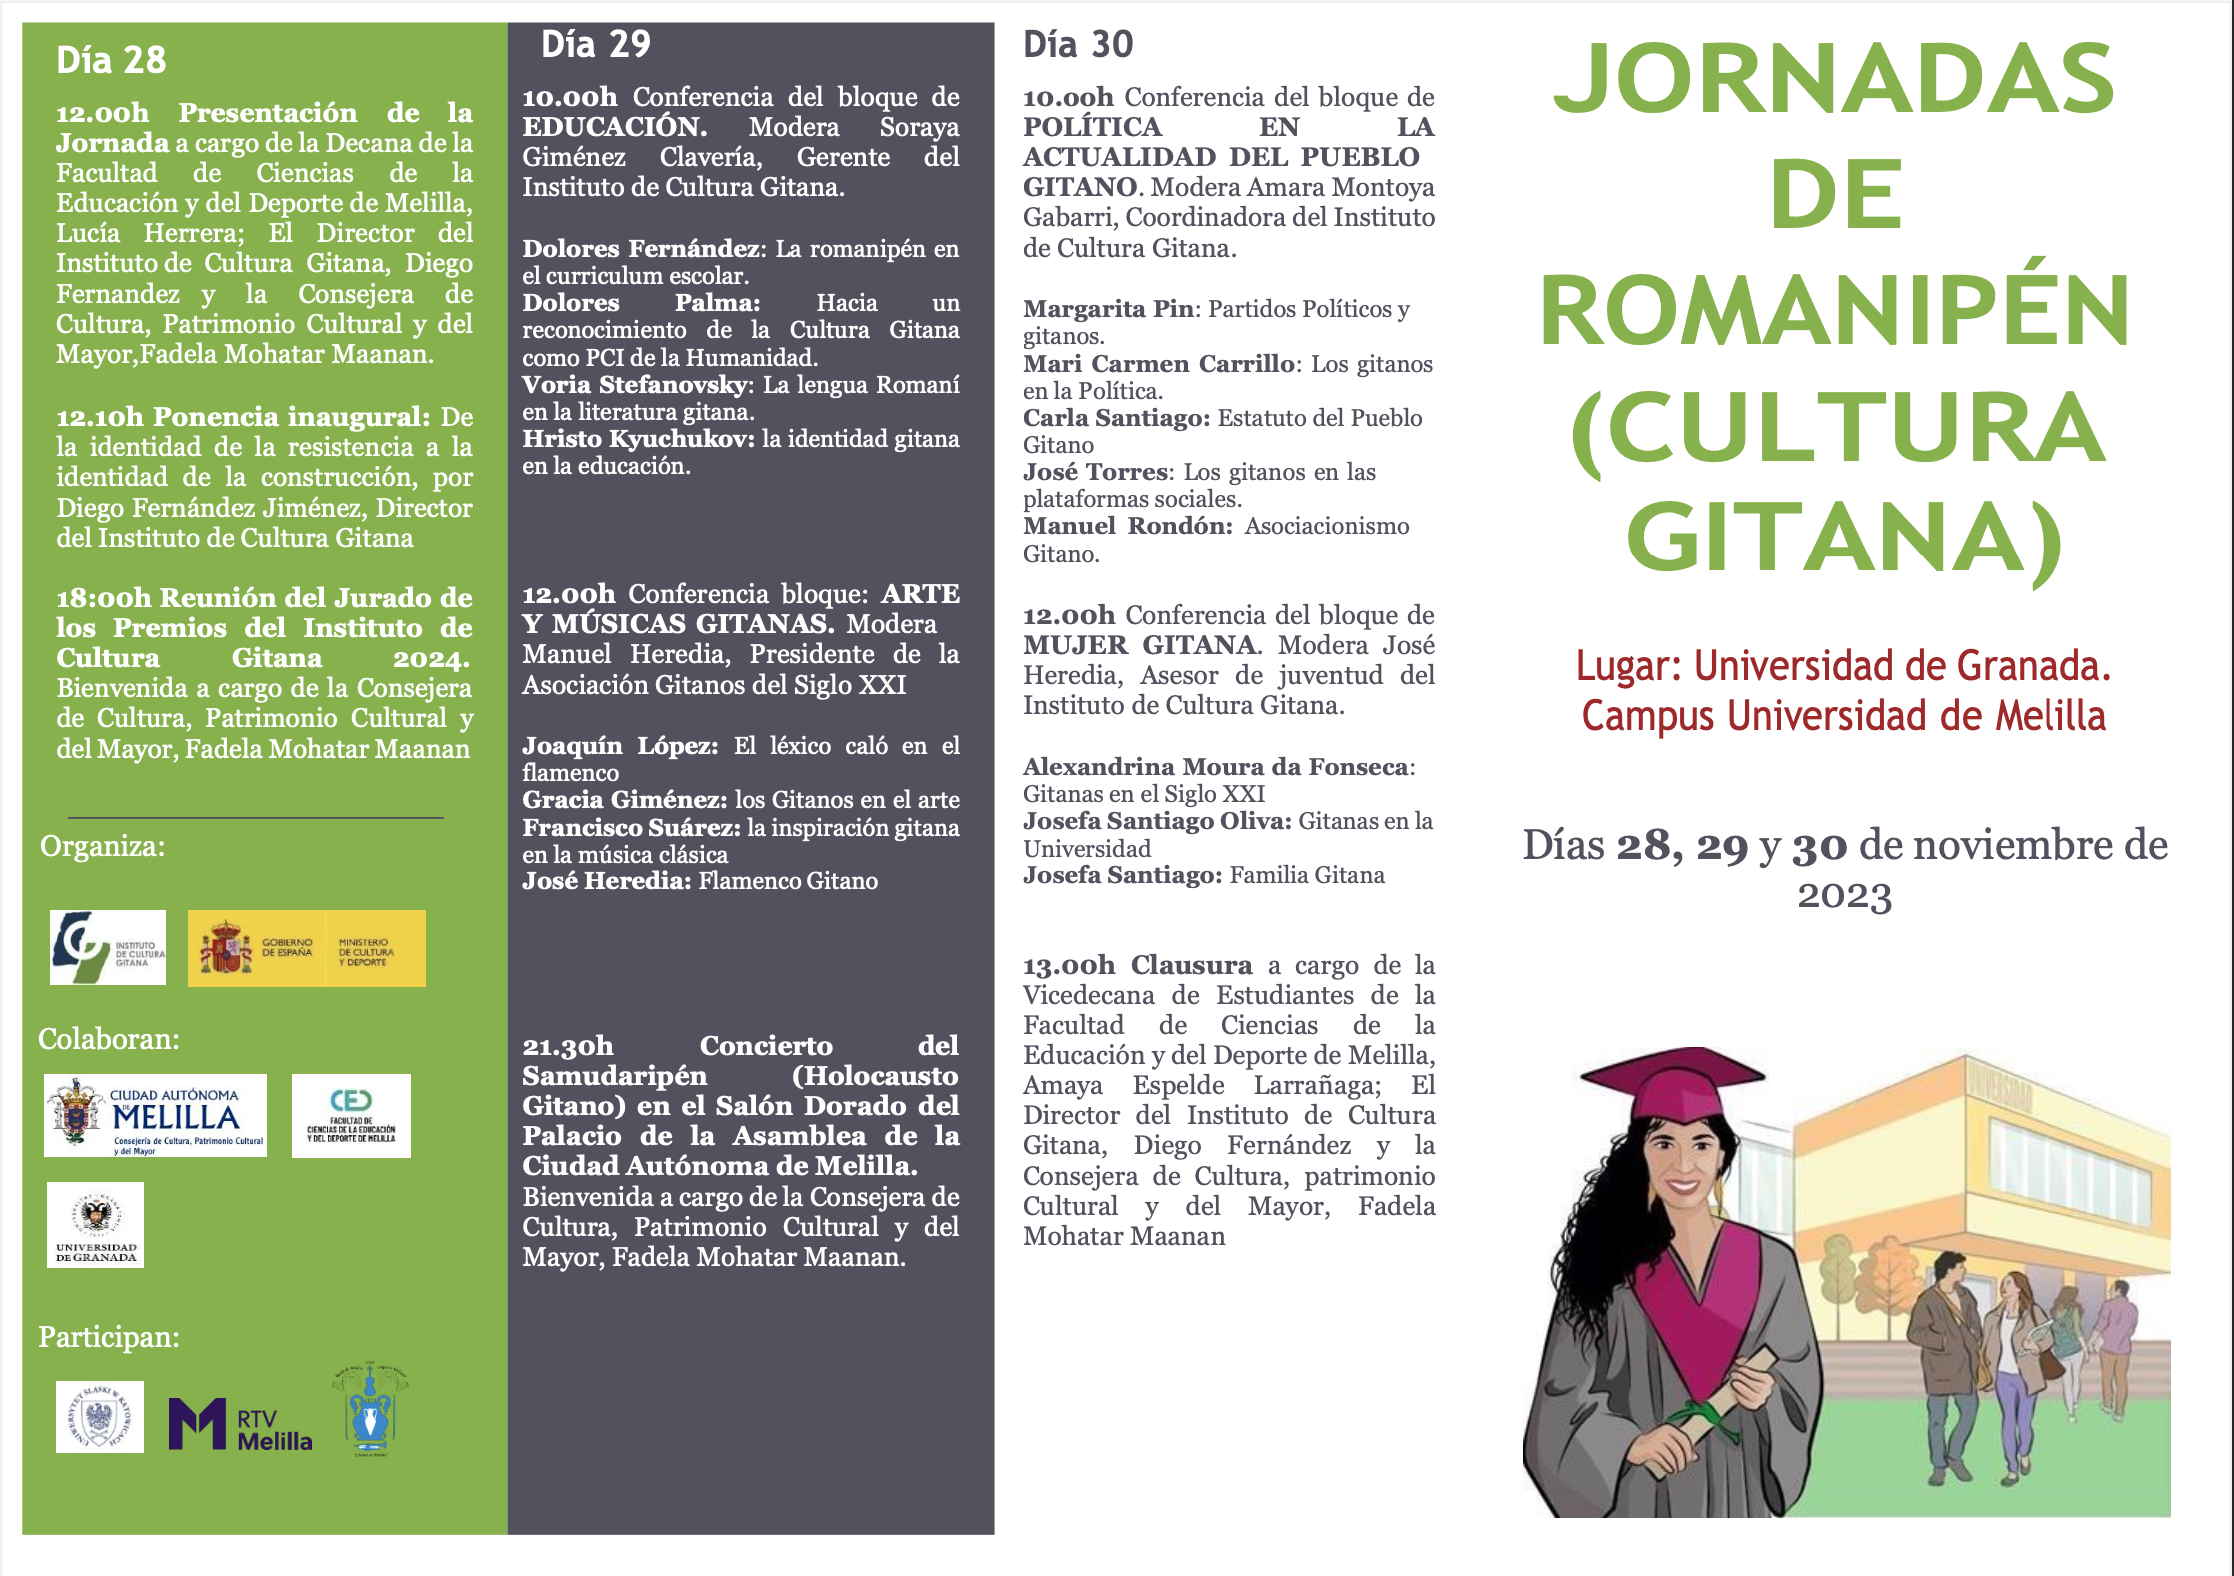 Programa de las jornadas 'Romanipén. Cultura Gitana', en el Campus de Melilla